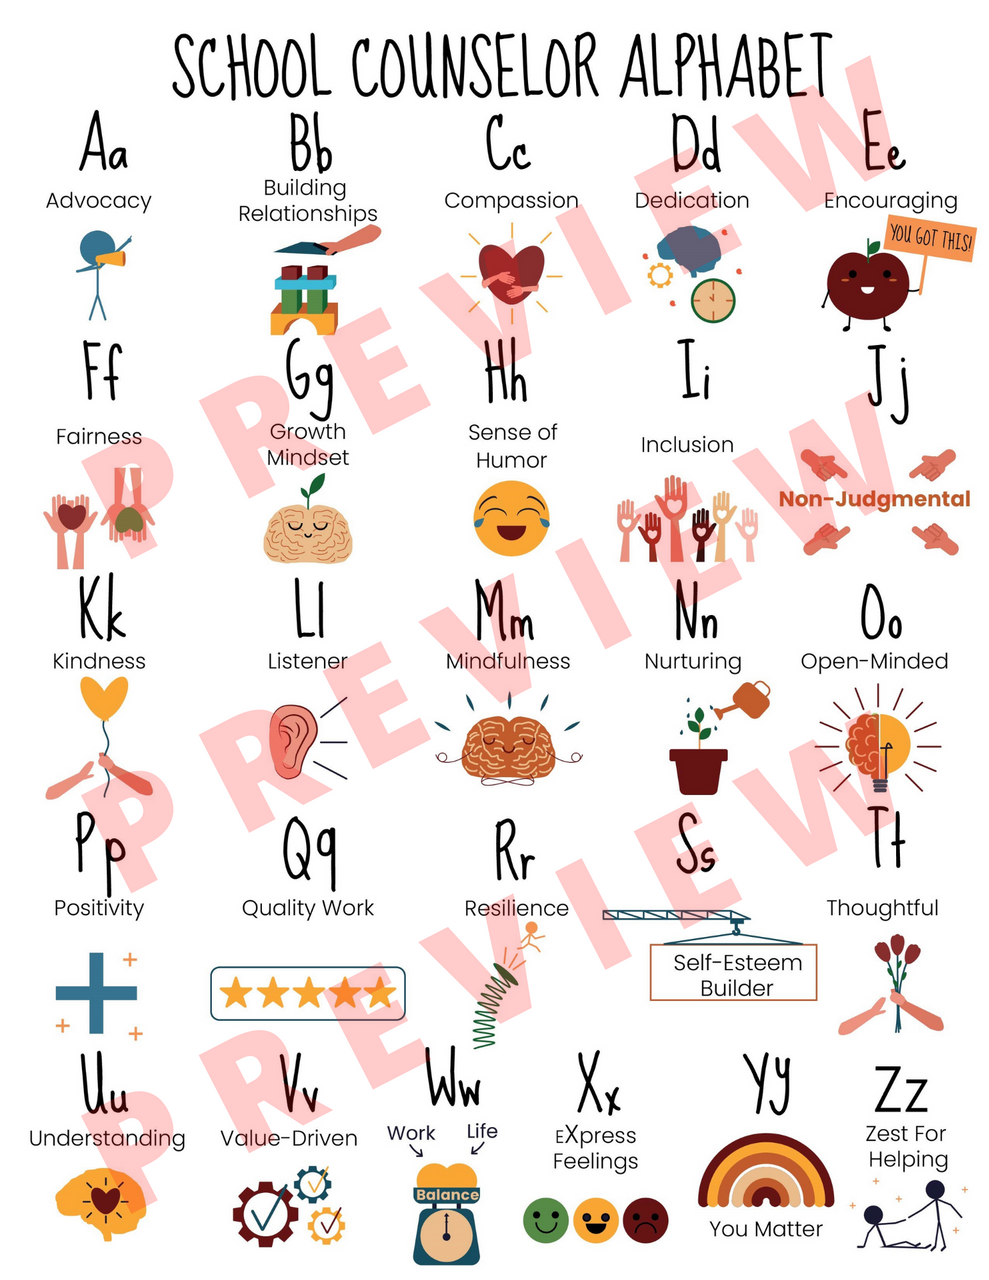 School Counselor Alphabet Printable Poster-A to Z School Counseling ABC Alphabet